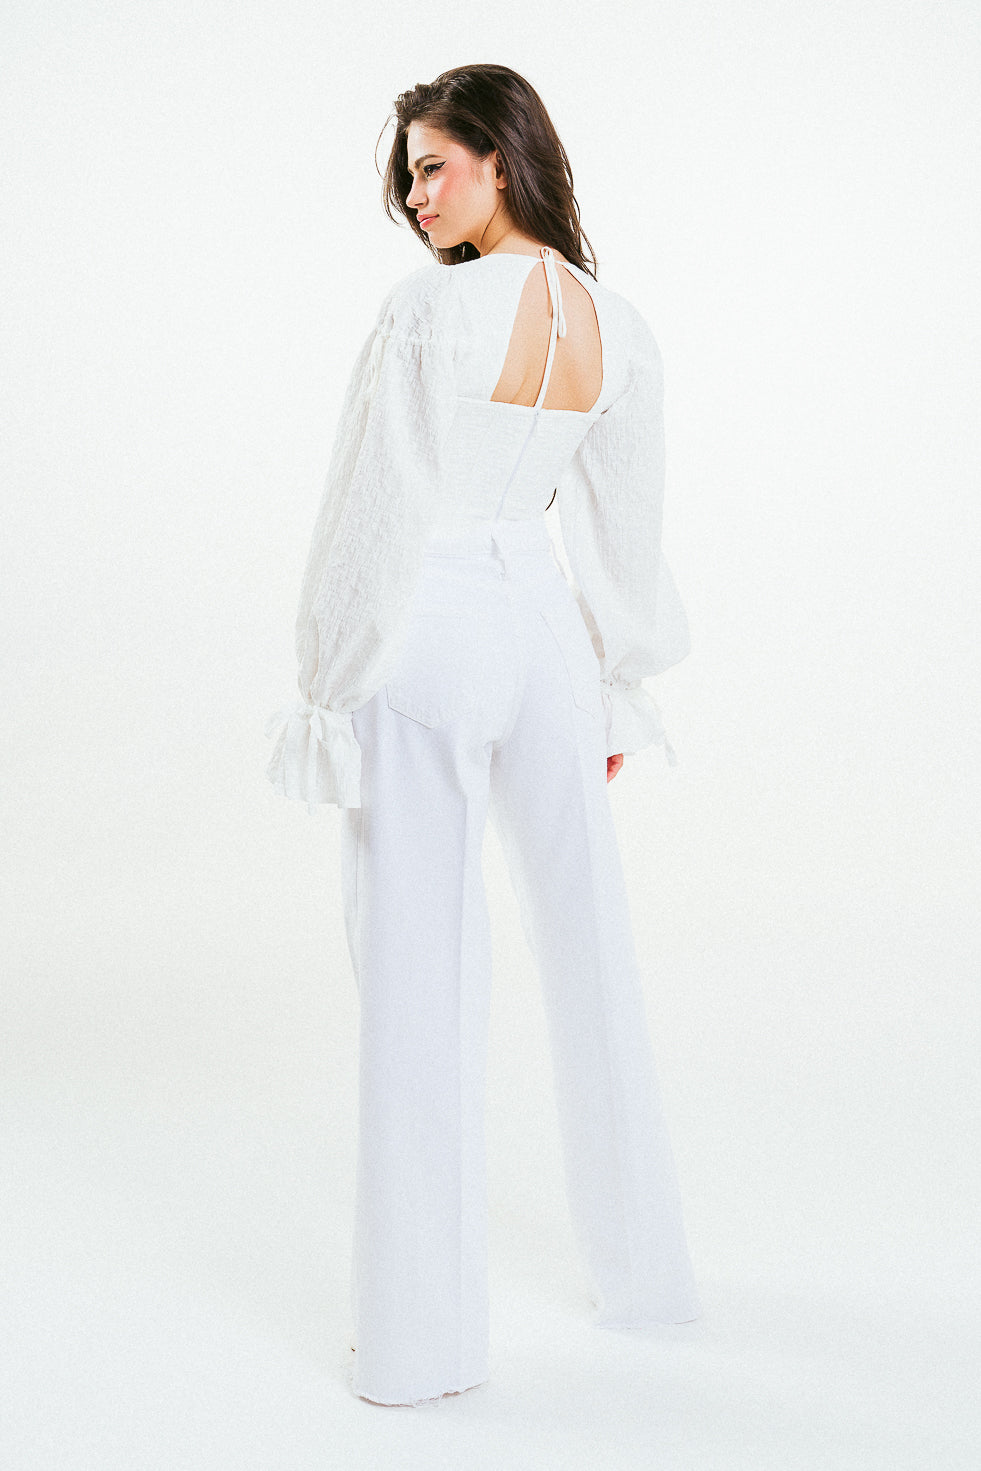 'JENNA' Cropped Corset White Textured Cotton Blouse